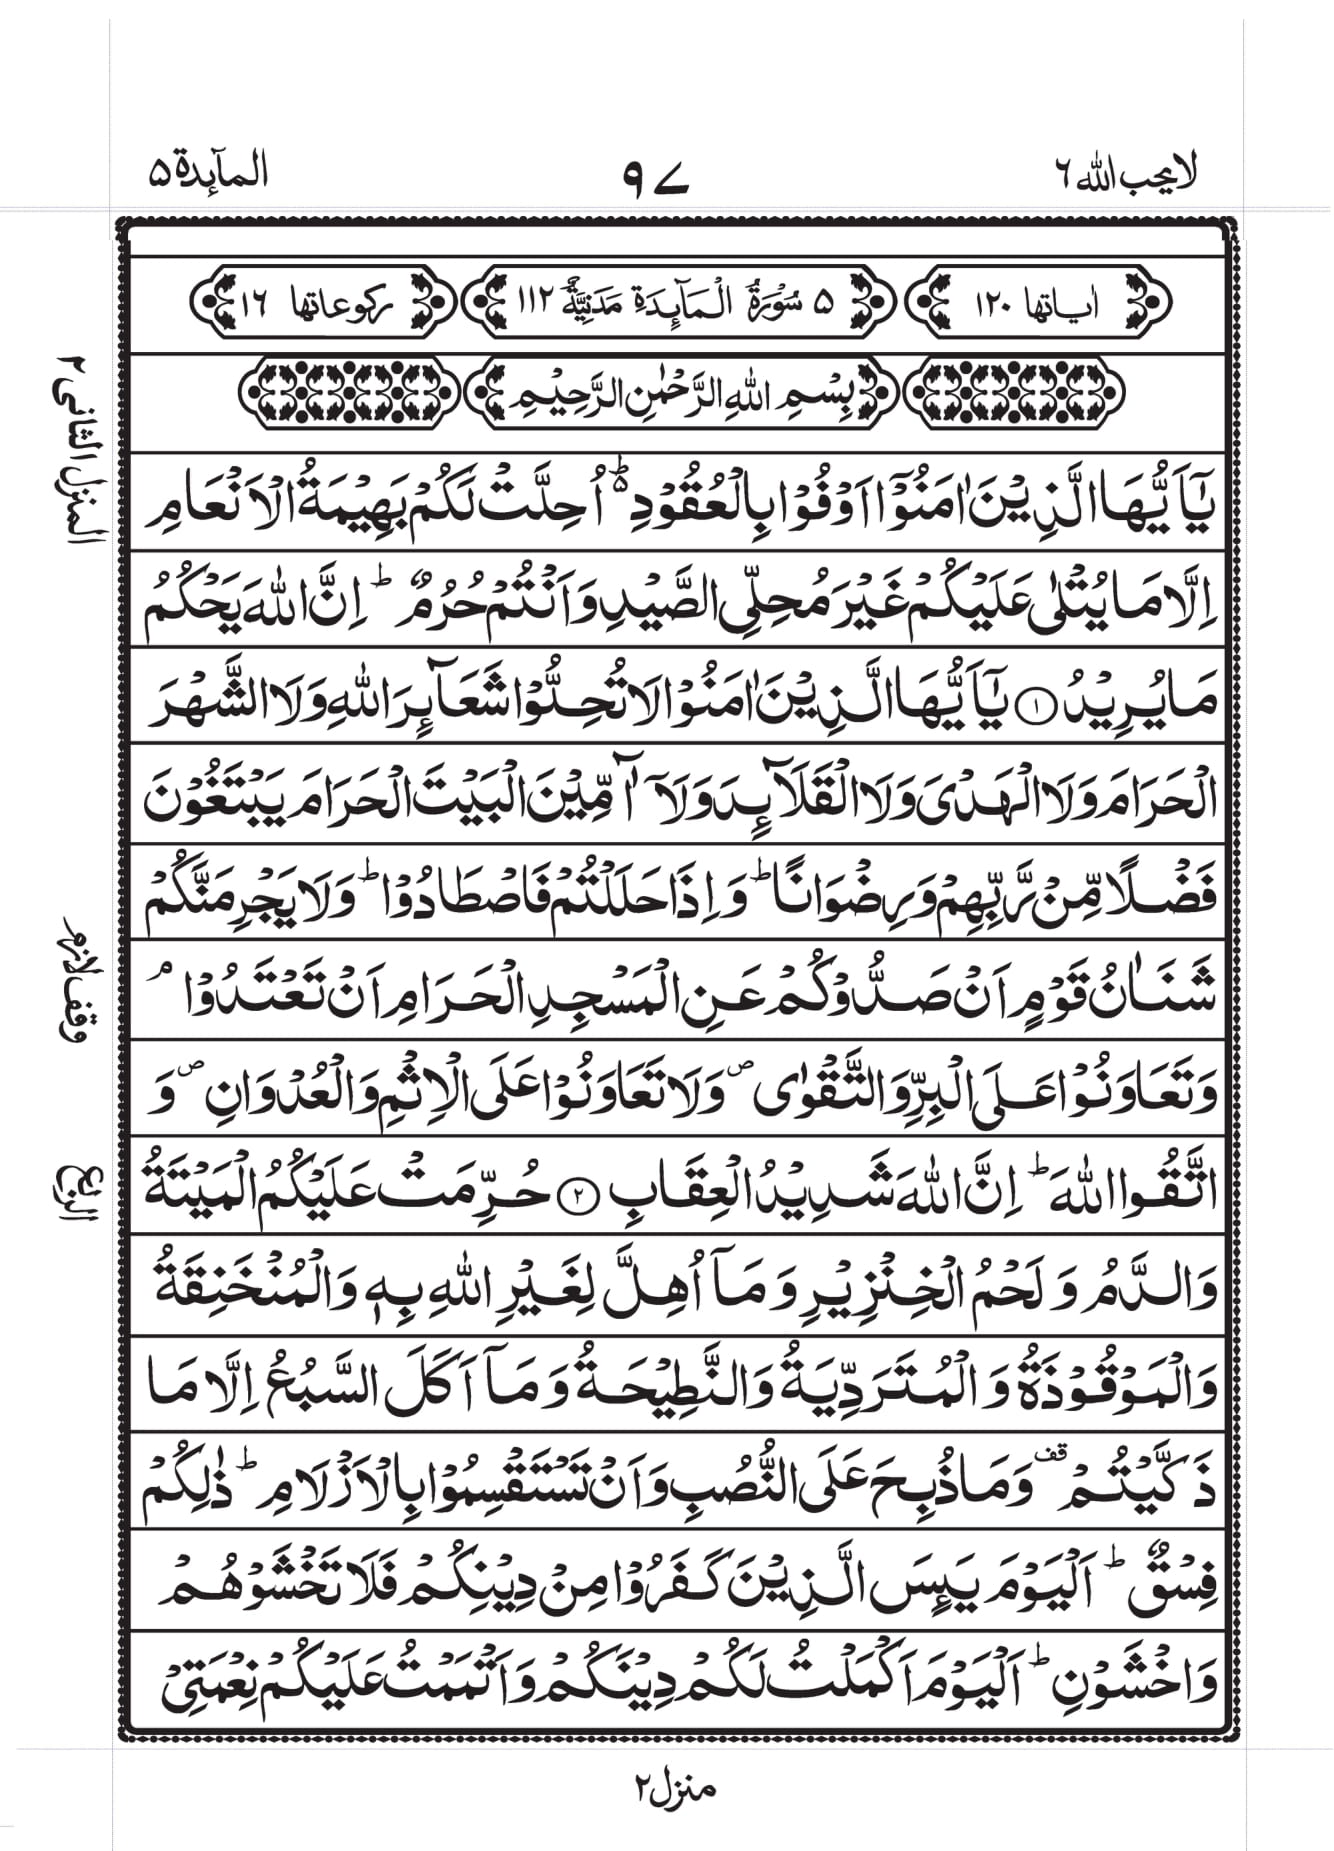 Surah Al-Maidah - Arabic Text with Urdu and English Translation